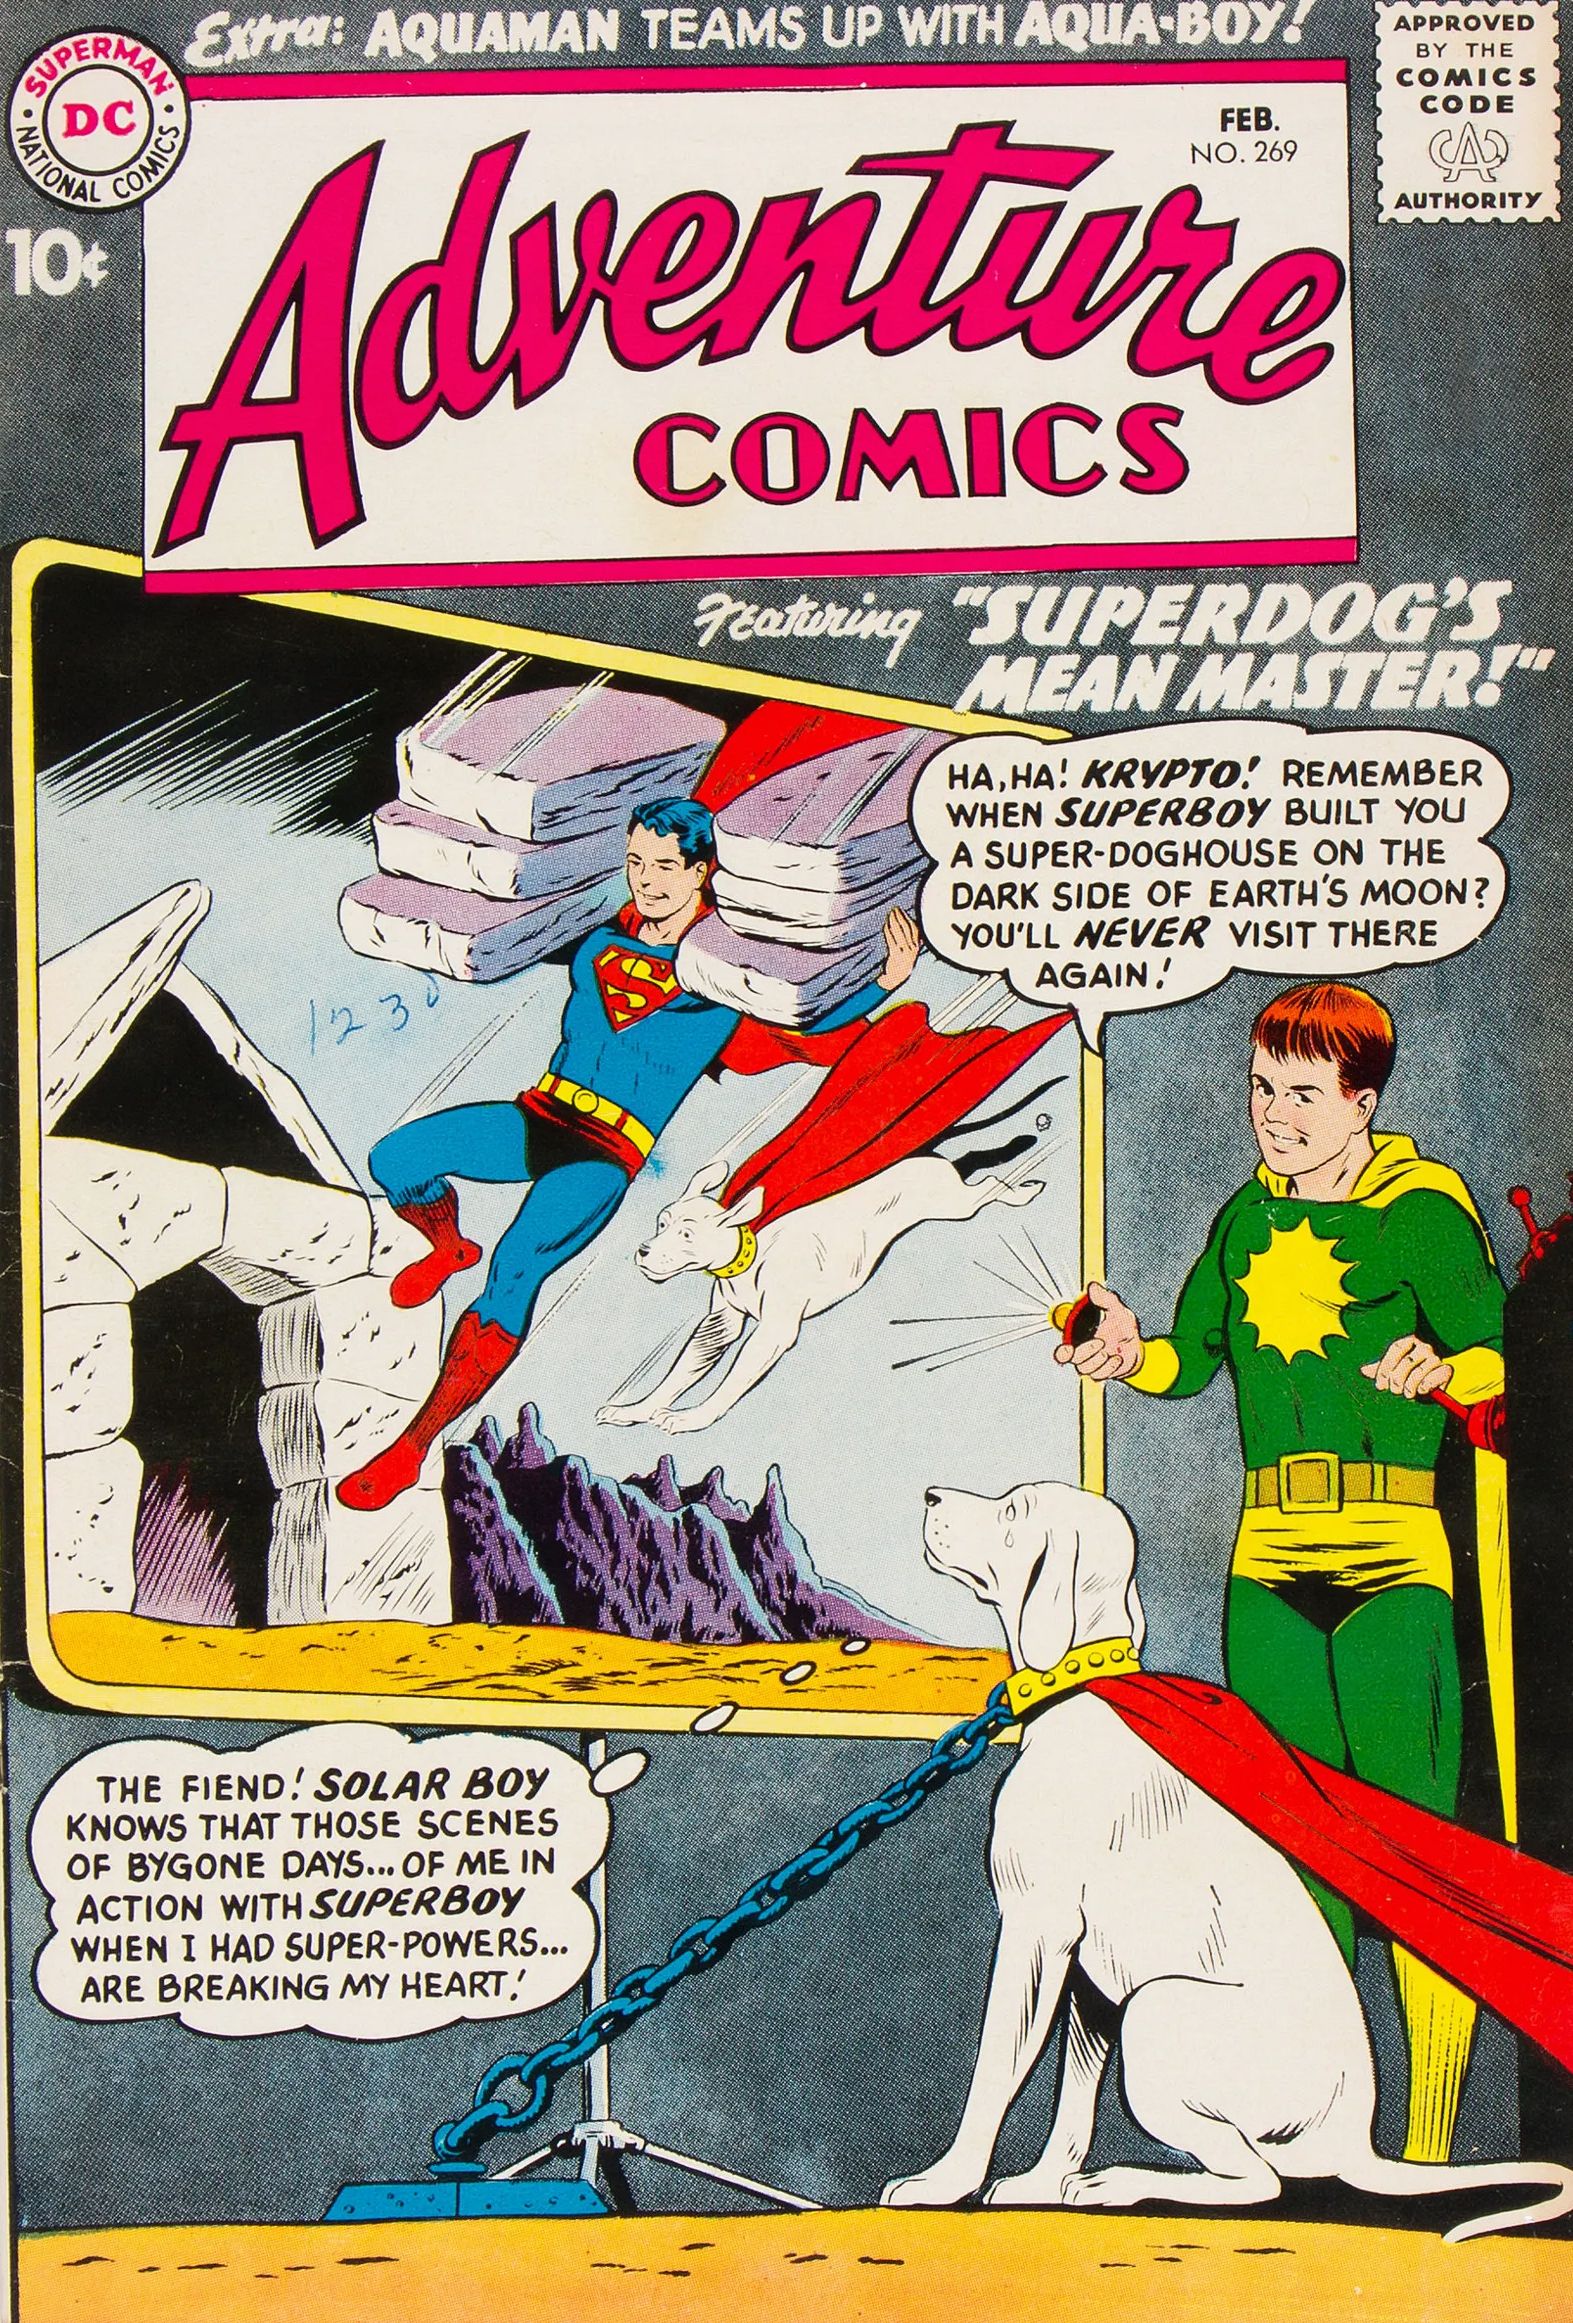 Adventure Comics #269 Comic